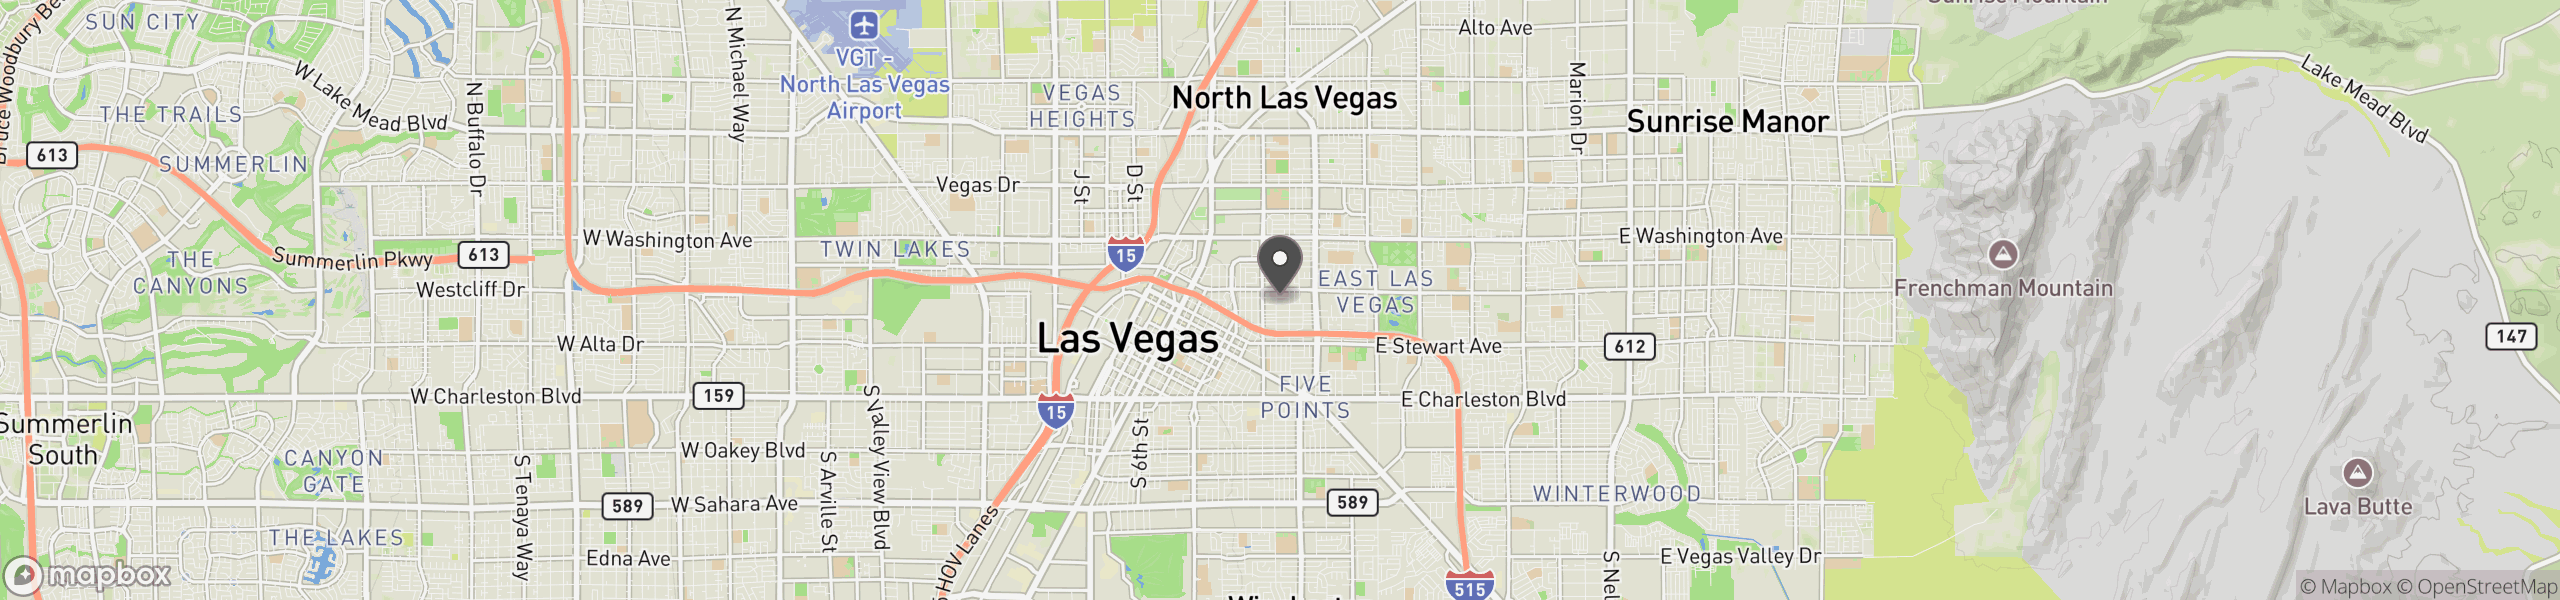 Las Vegas, NV 89101